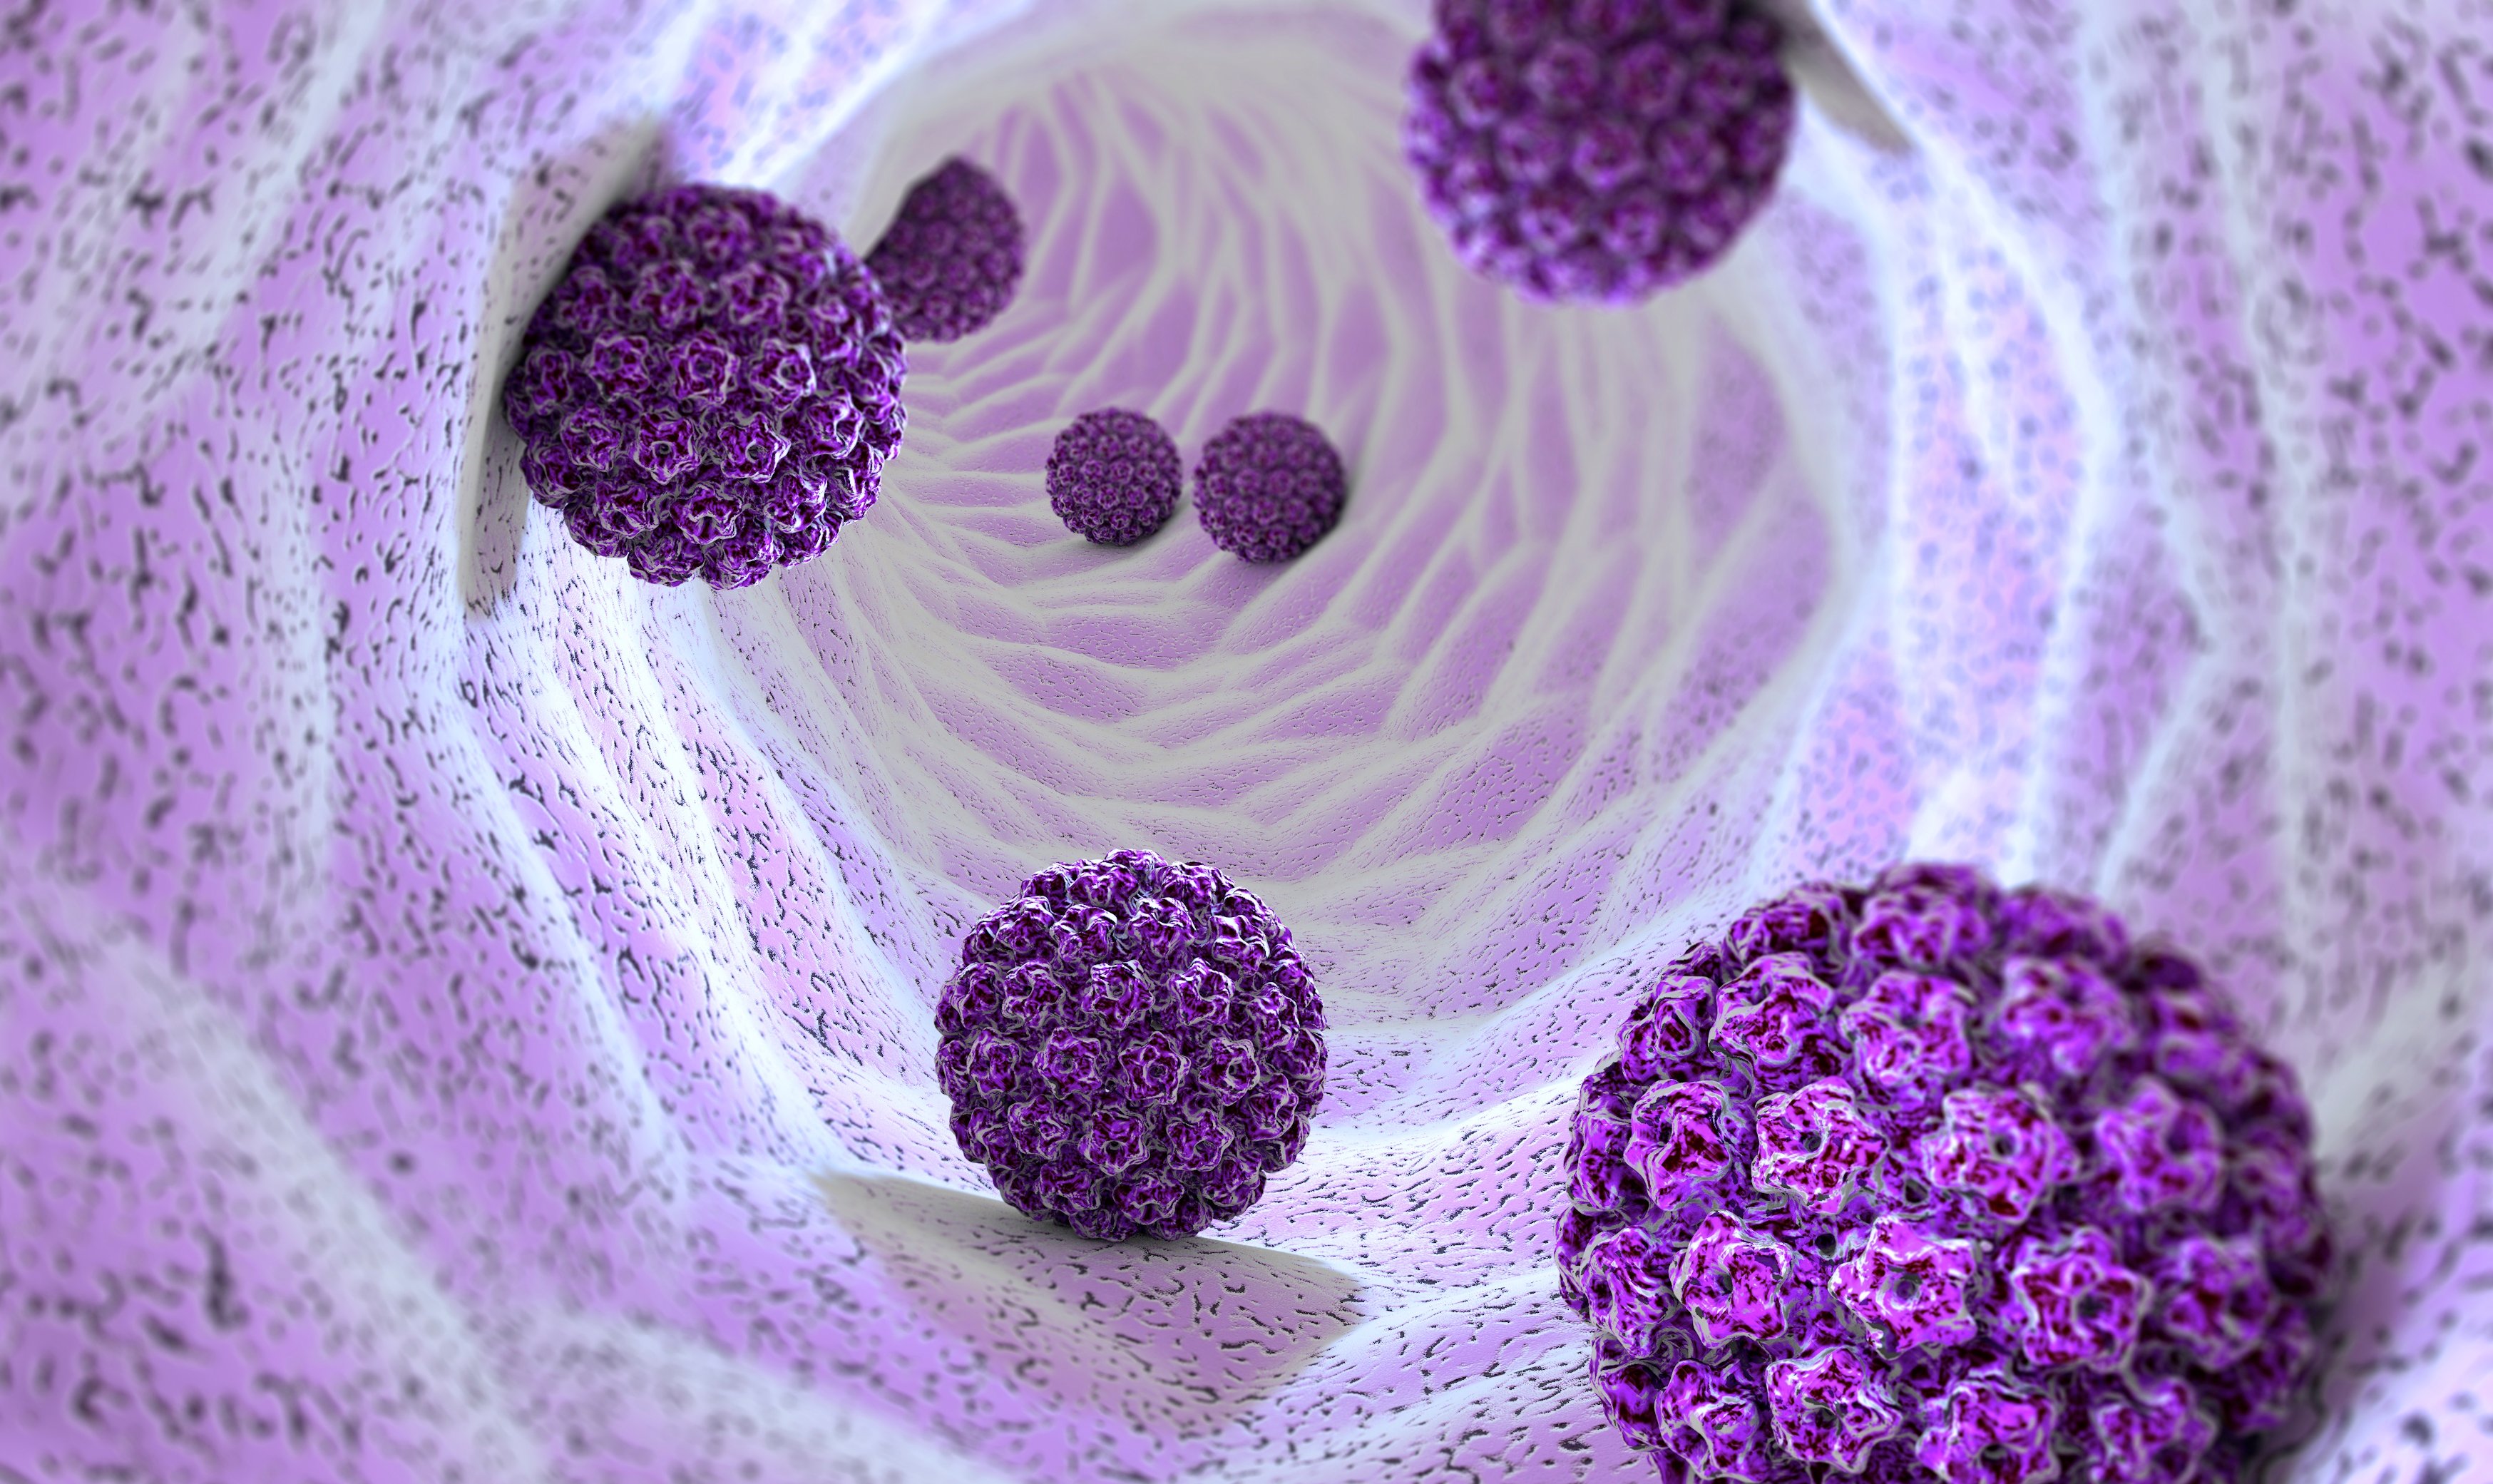 Human Papillomaviren (HPV) © Naeblys/Shutterstock.com